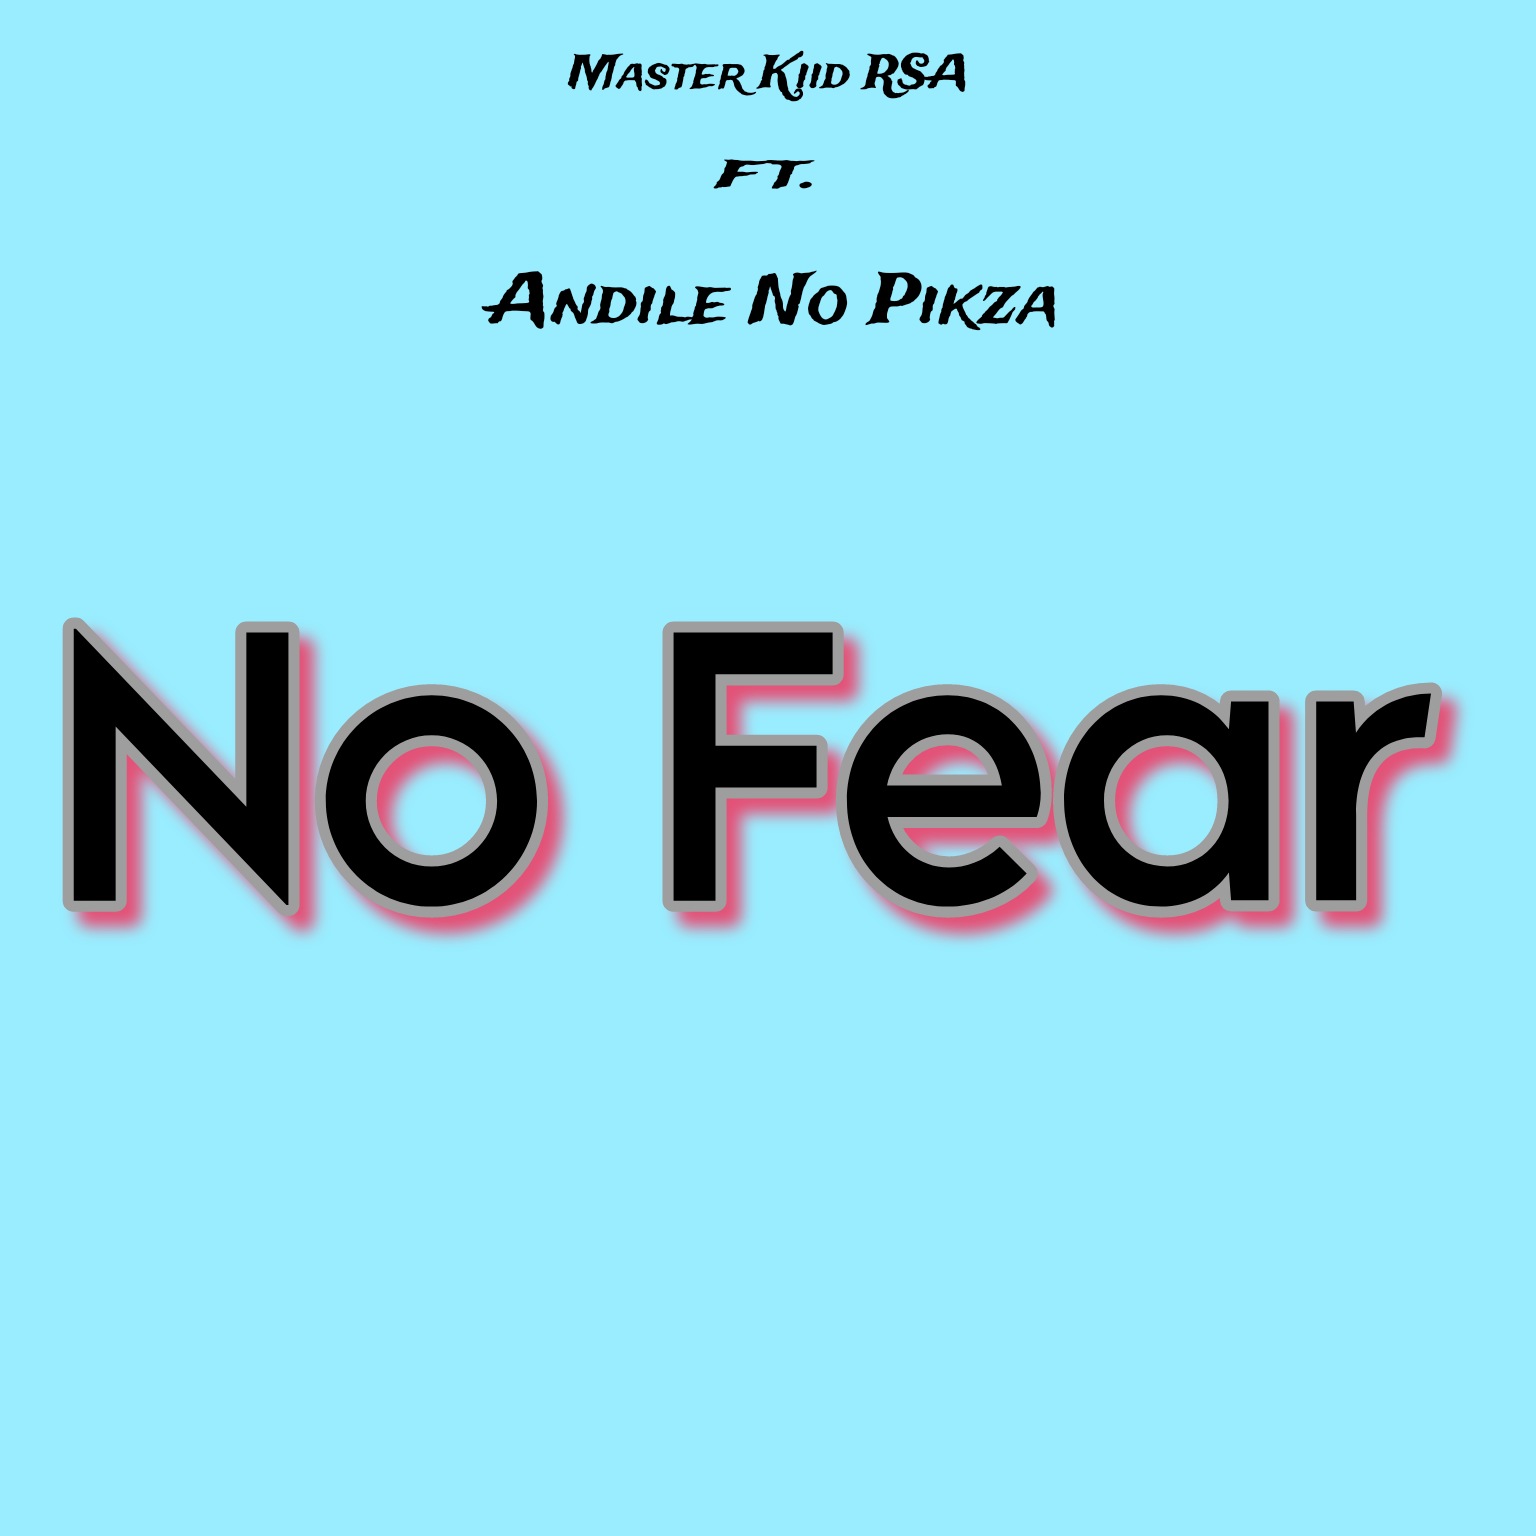 No Fear - Master Kiid RSA ft. Andile No Pikza